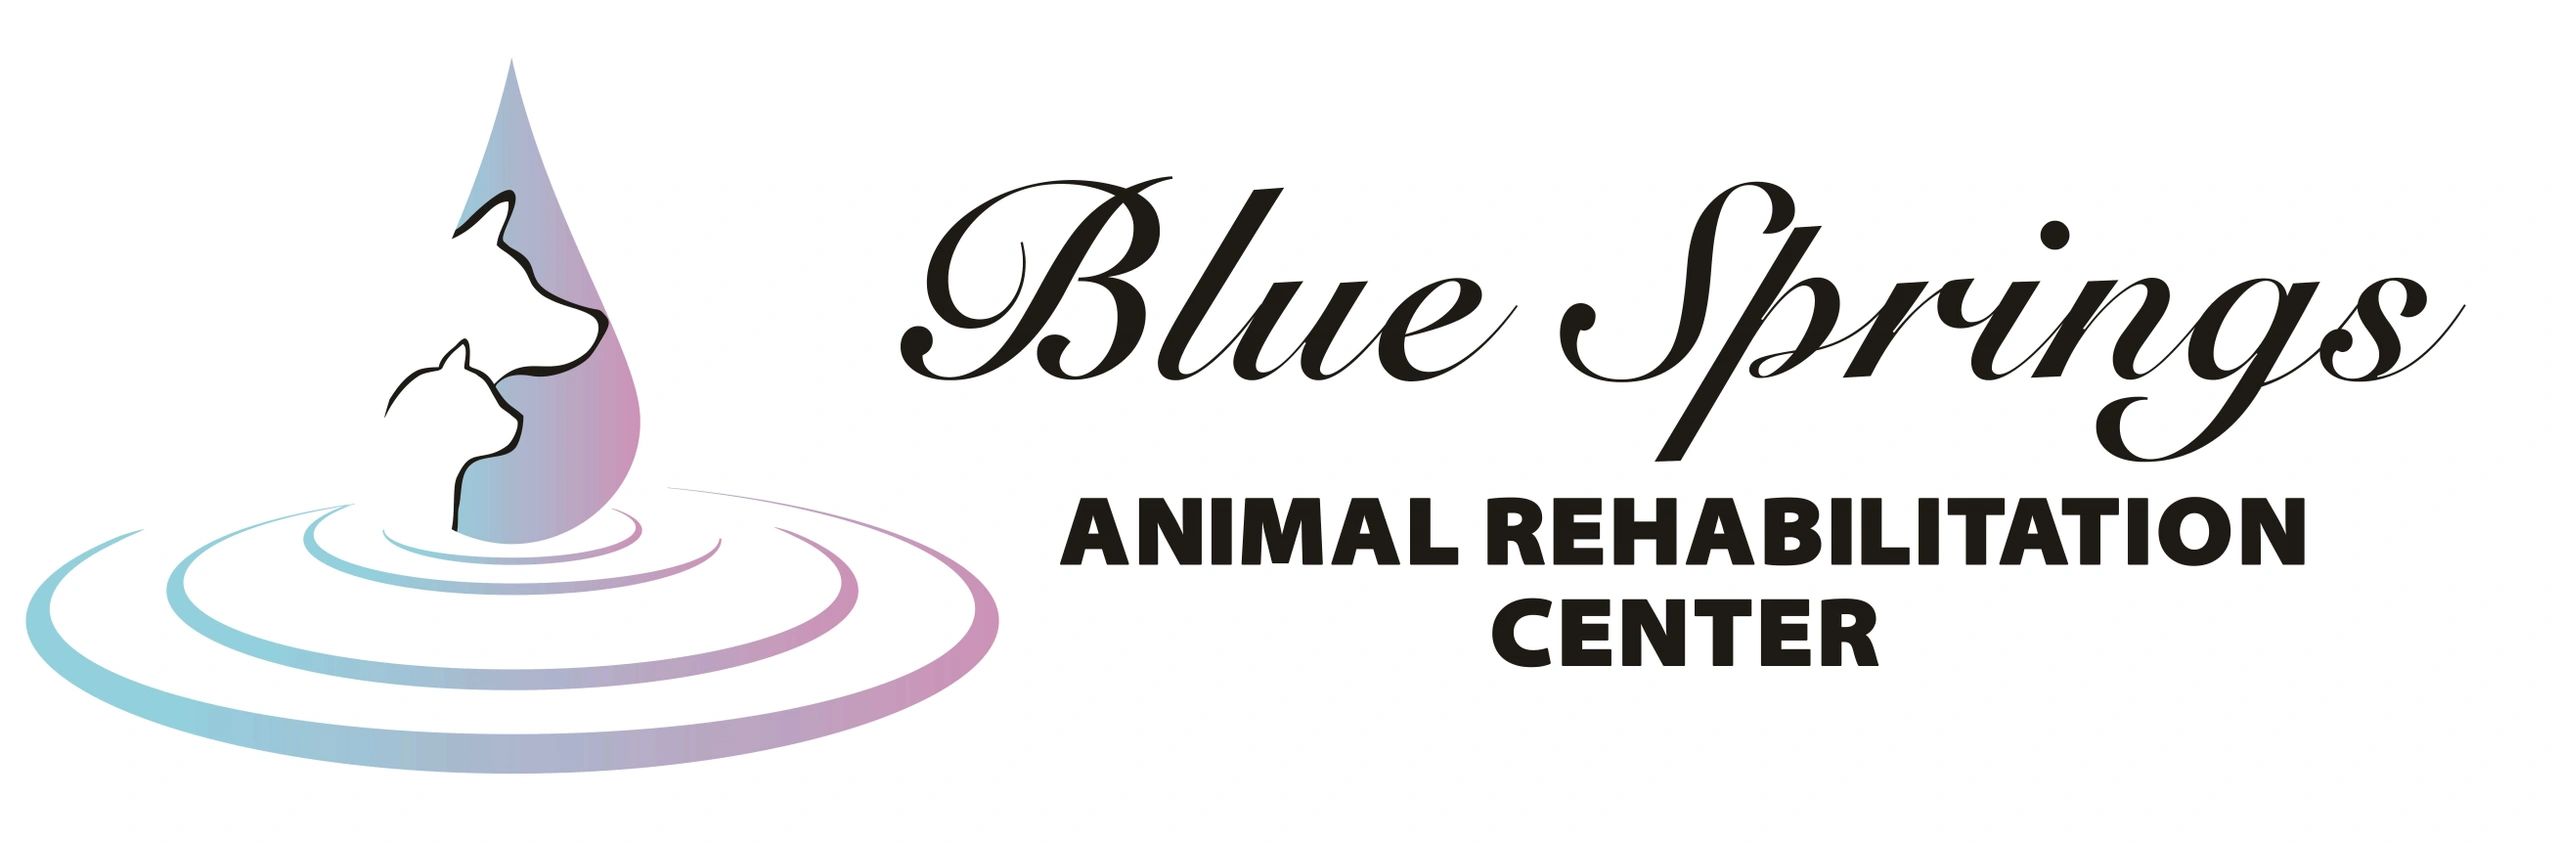 Blue Springs Animal Rehabilitation Center - Home